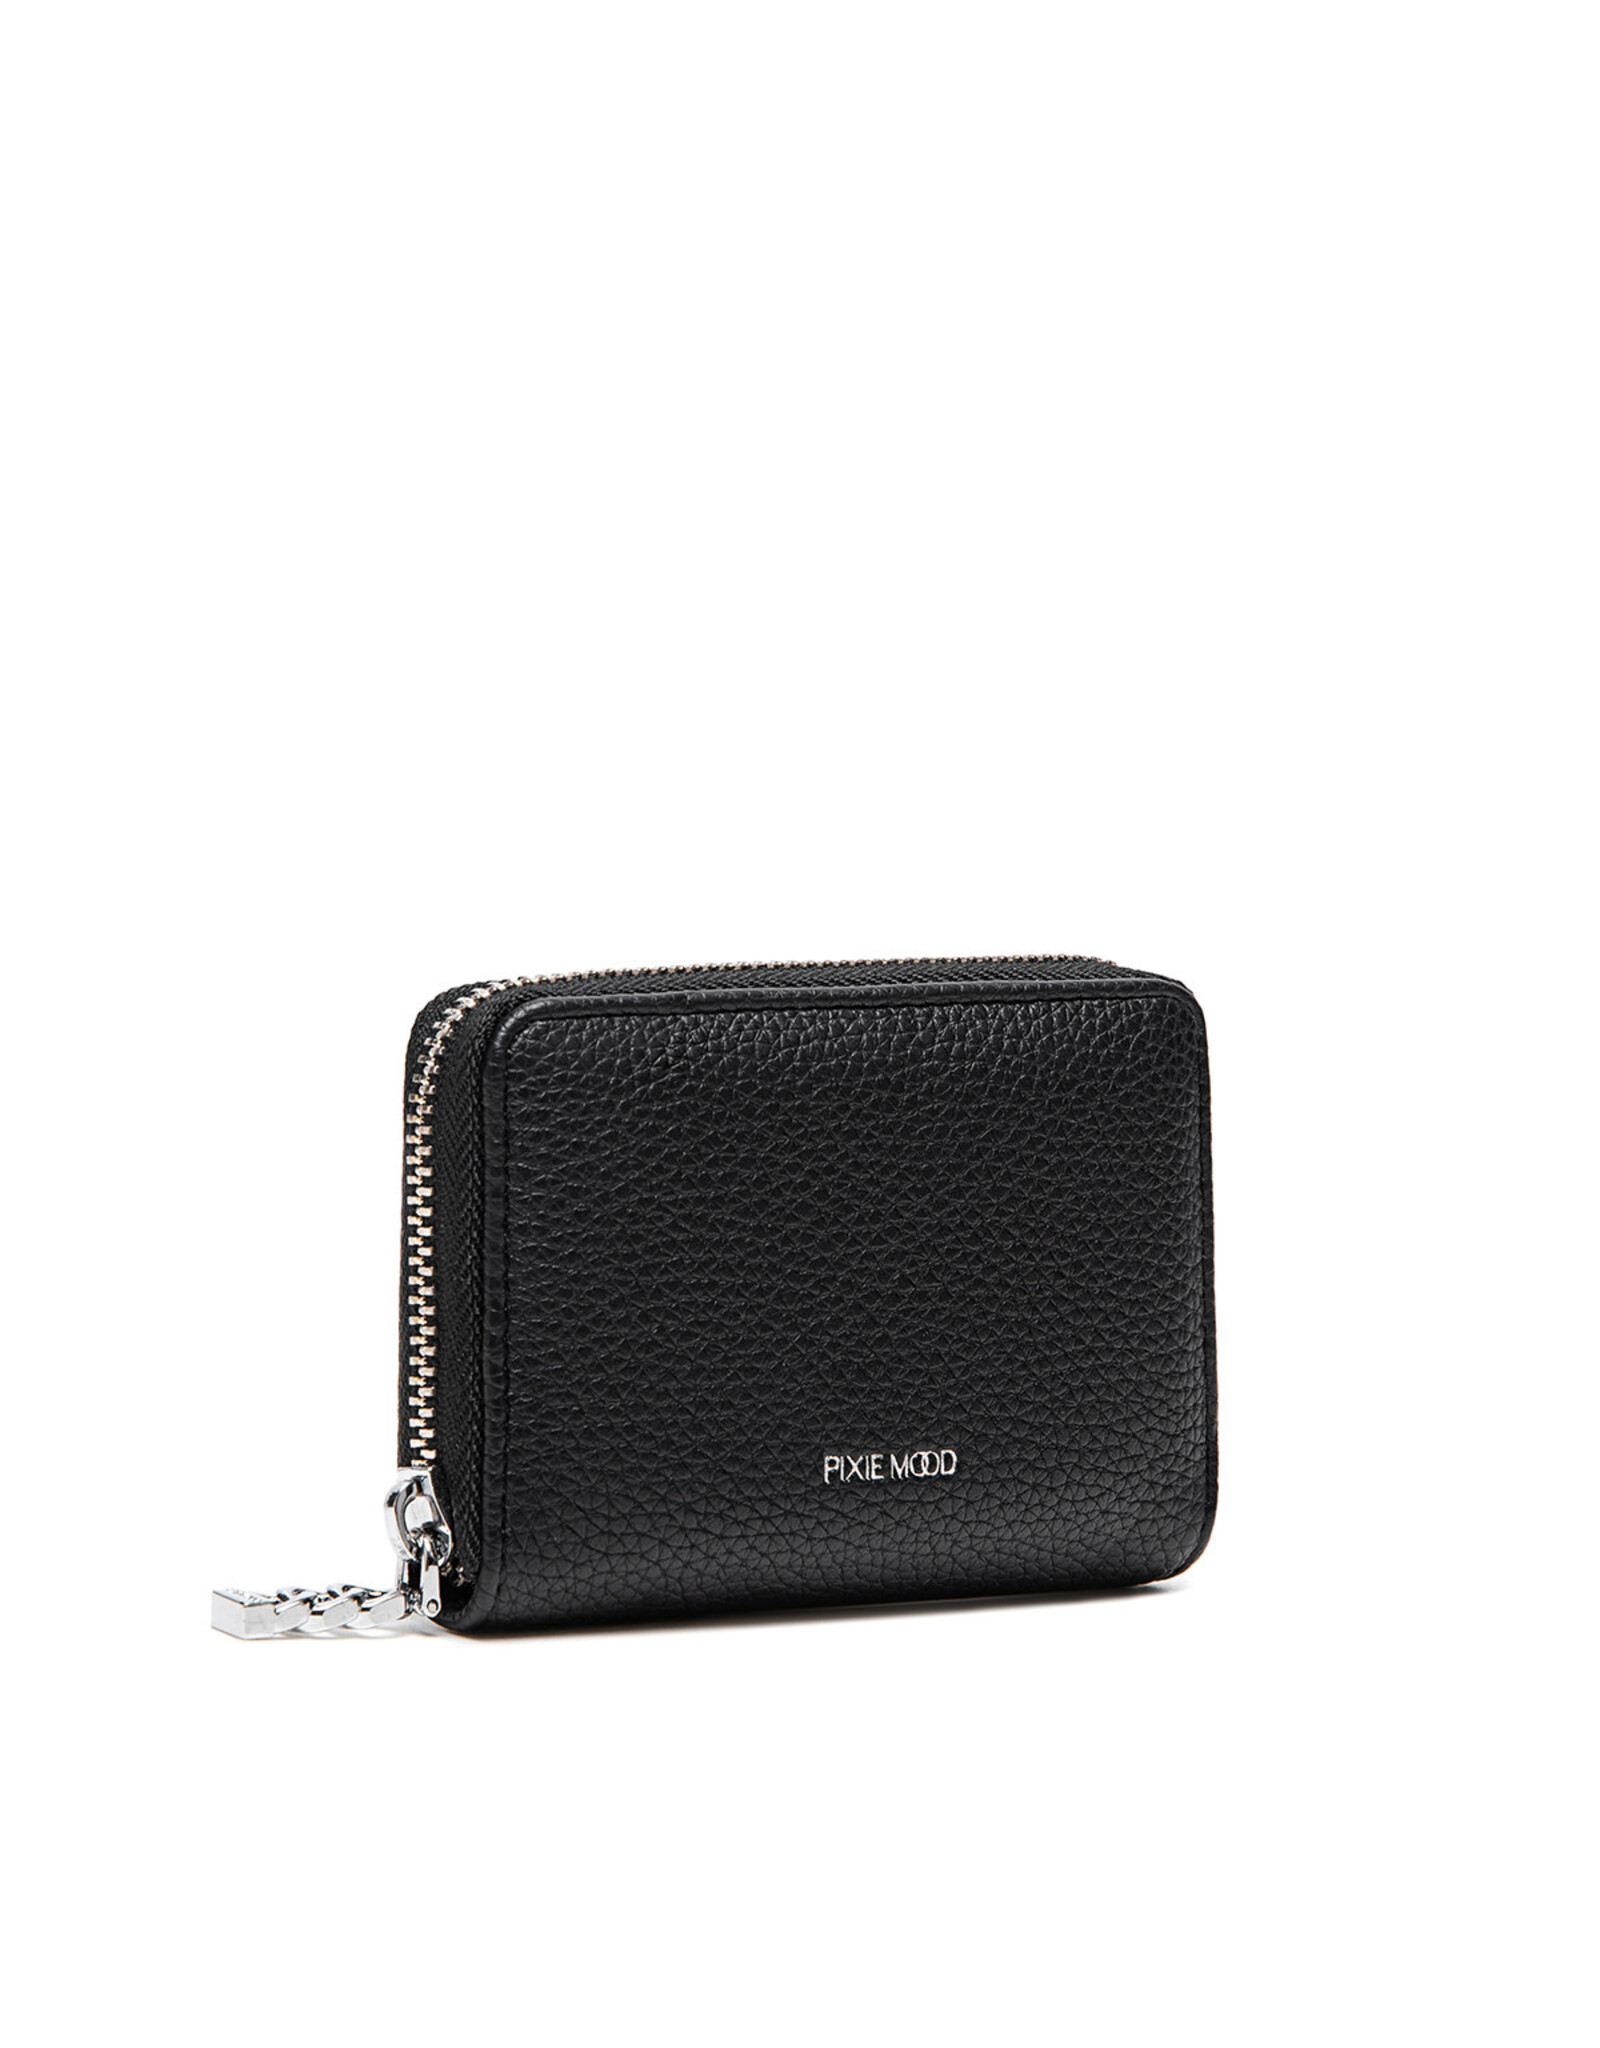 Pixie Mood -  Kimi Card Wallet / Black